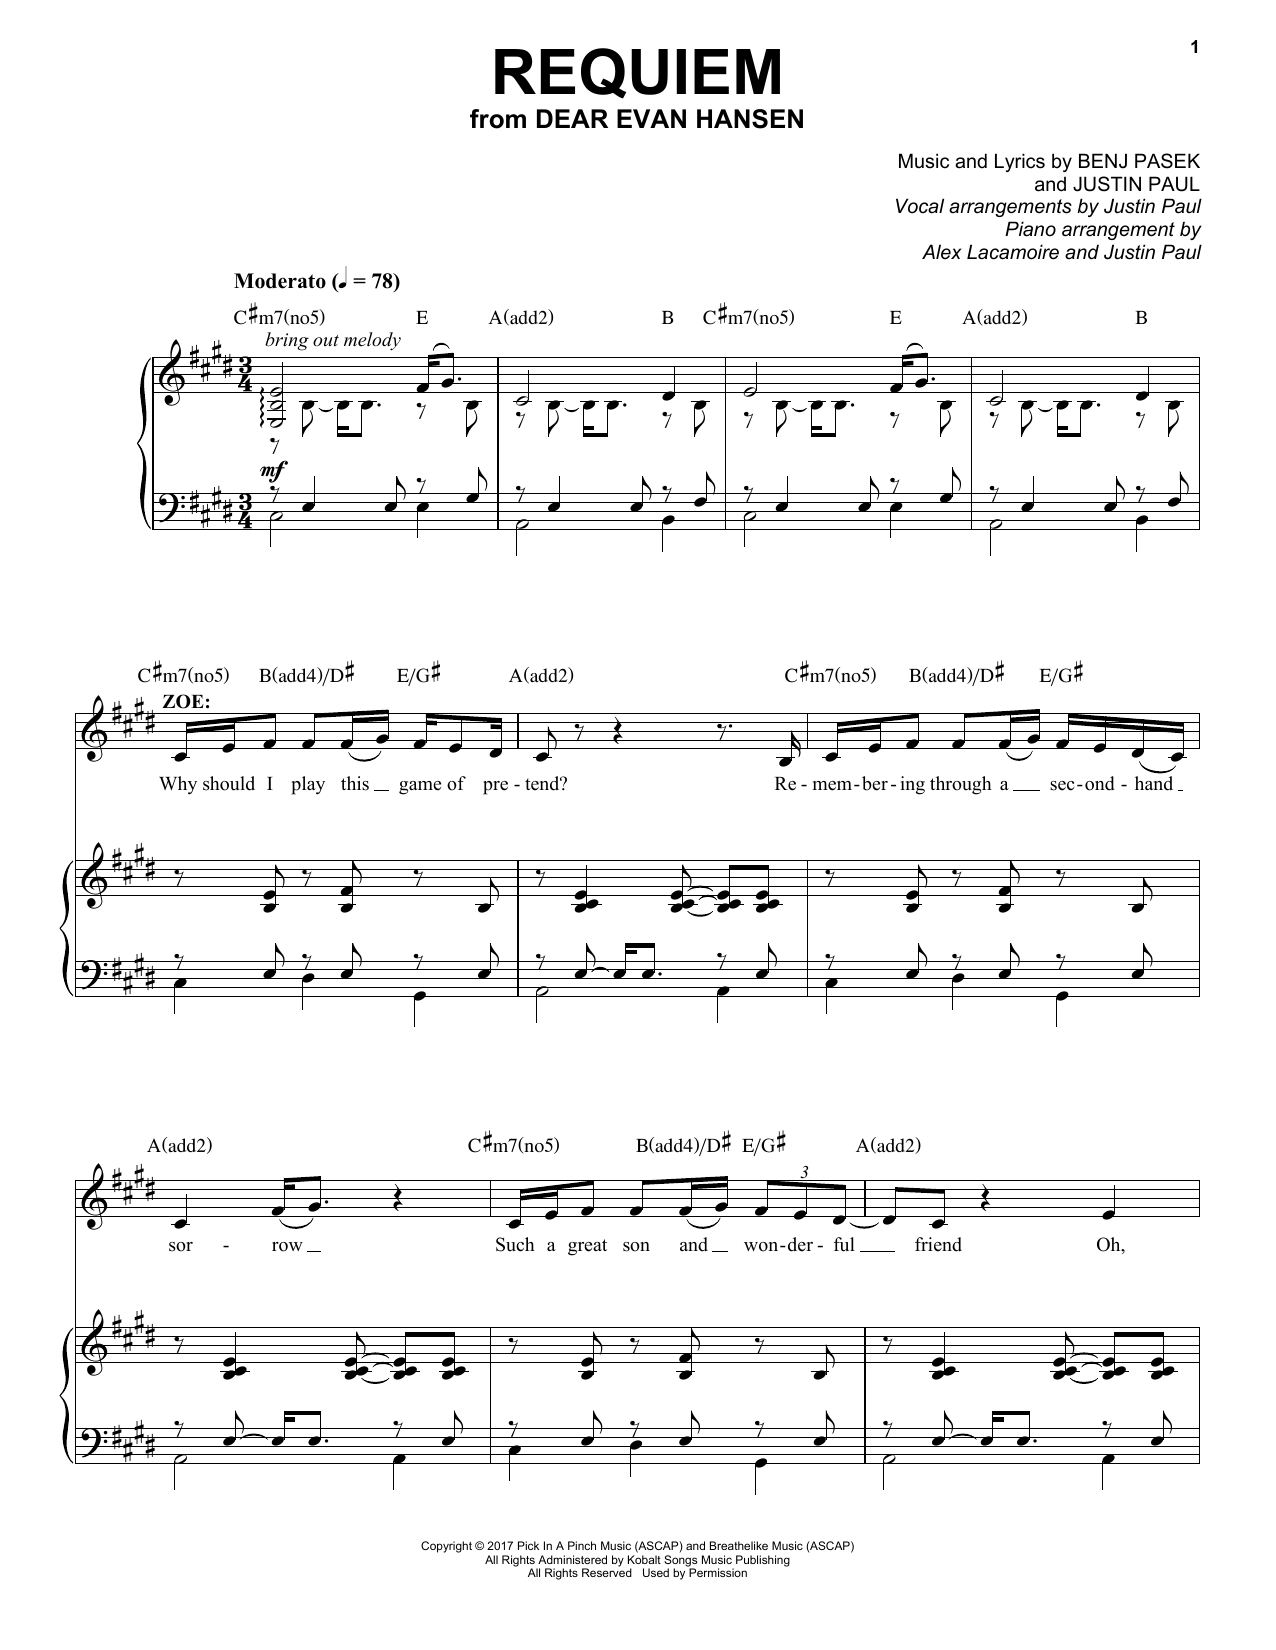 Pasek & Paul Requiem (from Dear Evan Hansen) Sheet Music Notes & Chords for Guitar Chords/Lyrics - Download or Print PDF